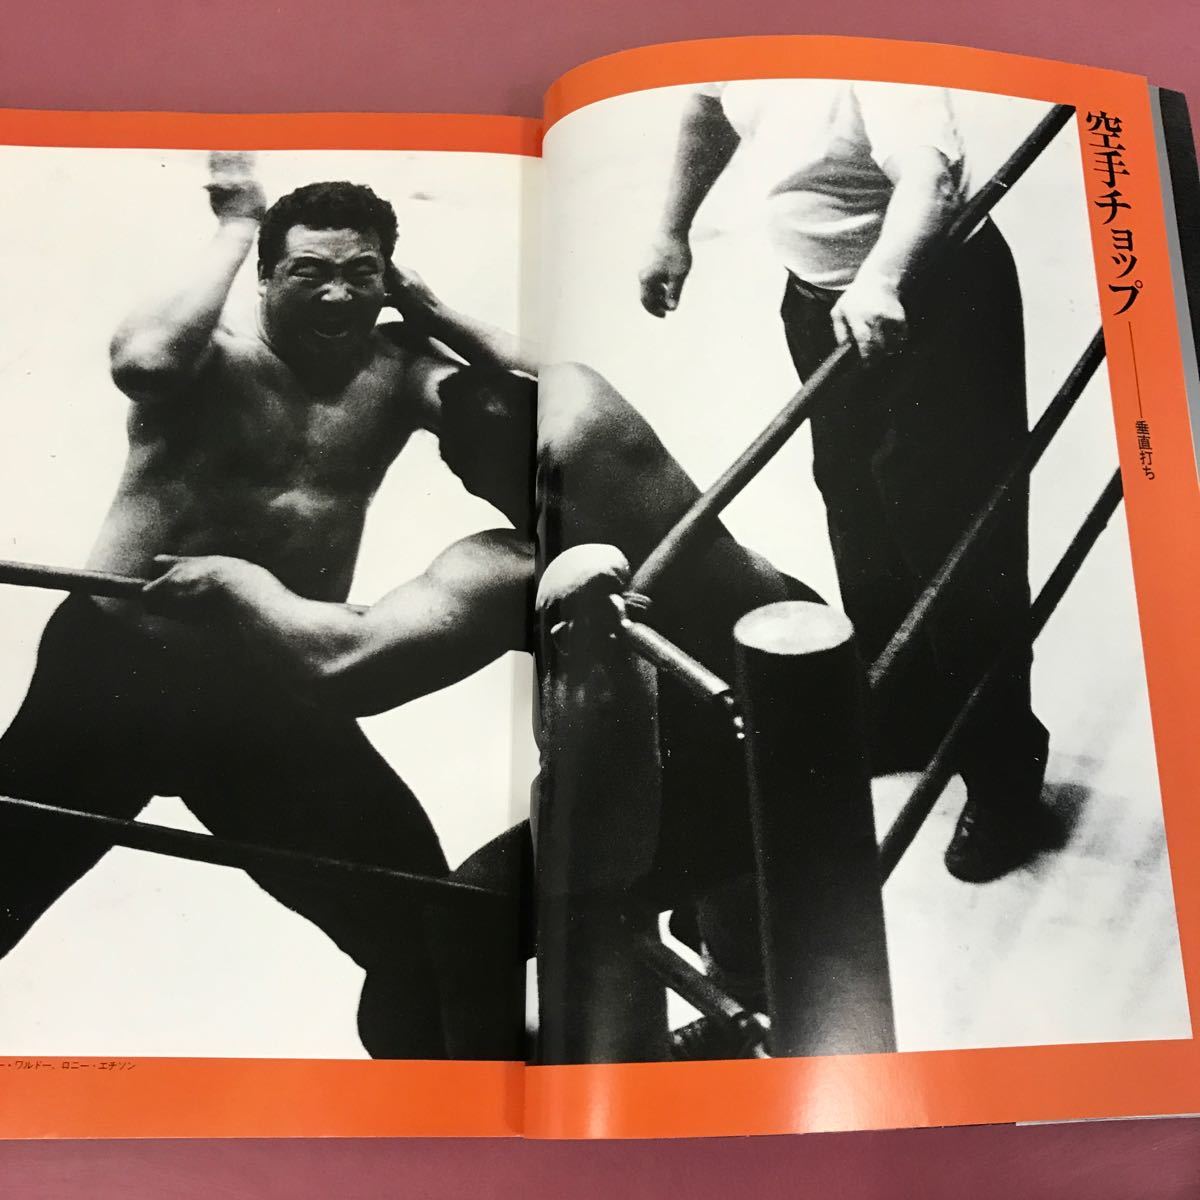 D07-004 фотоальбом BEST HIT SERIES The * сила дорога гора Showa 58 год 9 месяц 10 день выпуск Champion * load Professional Wrestling 